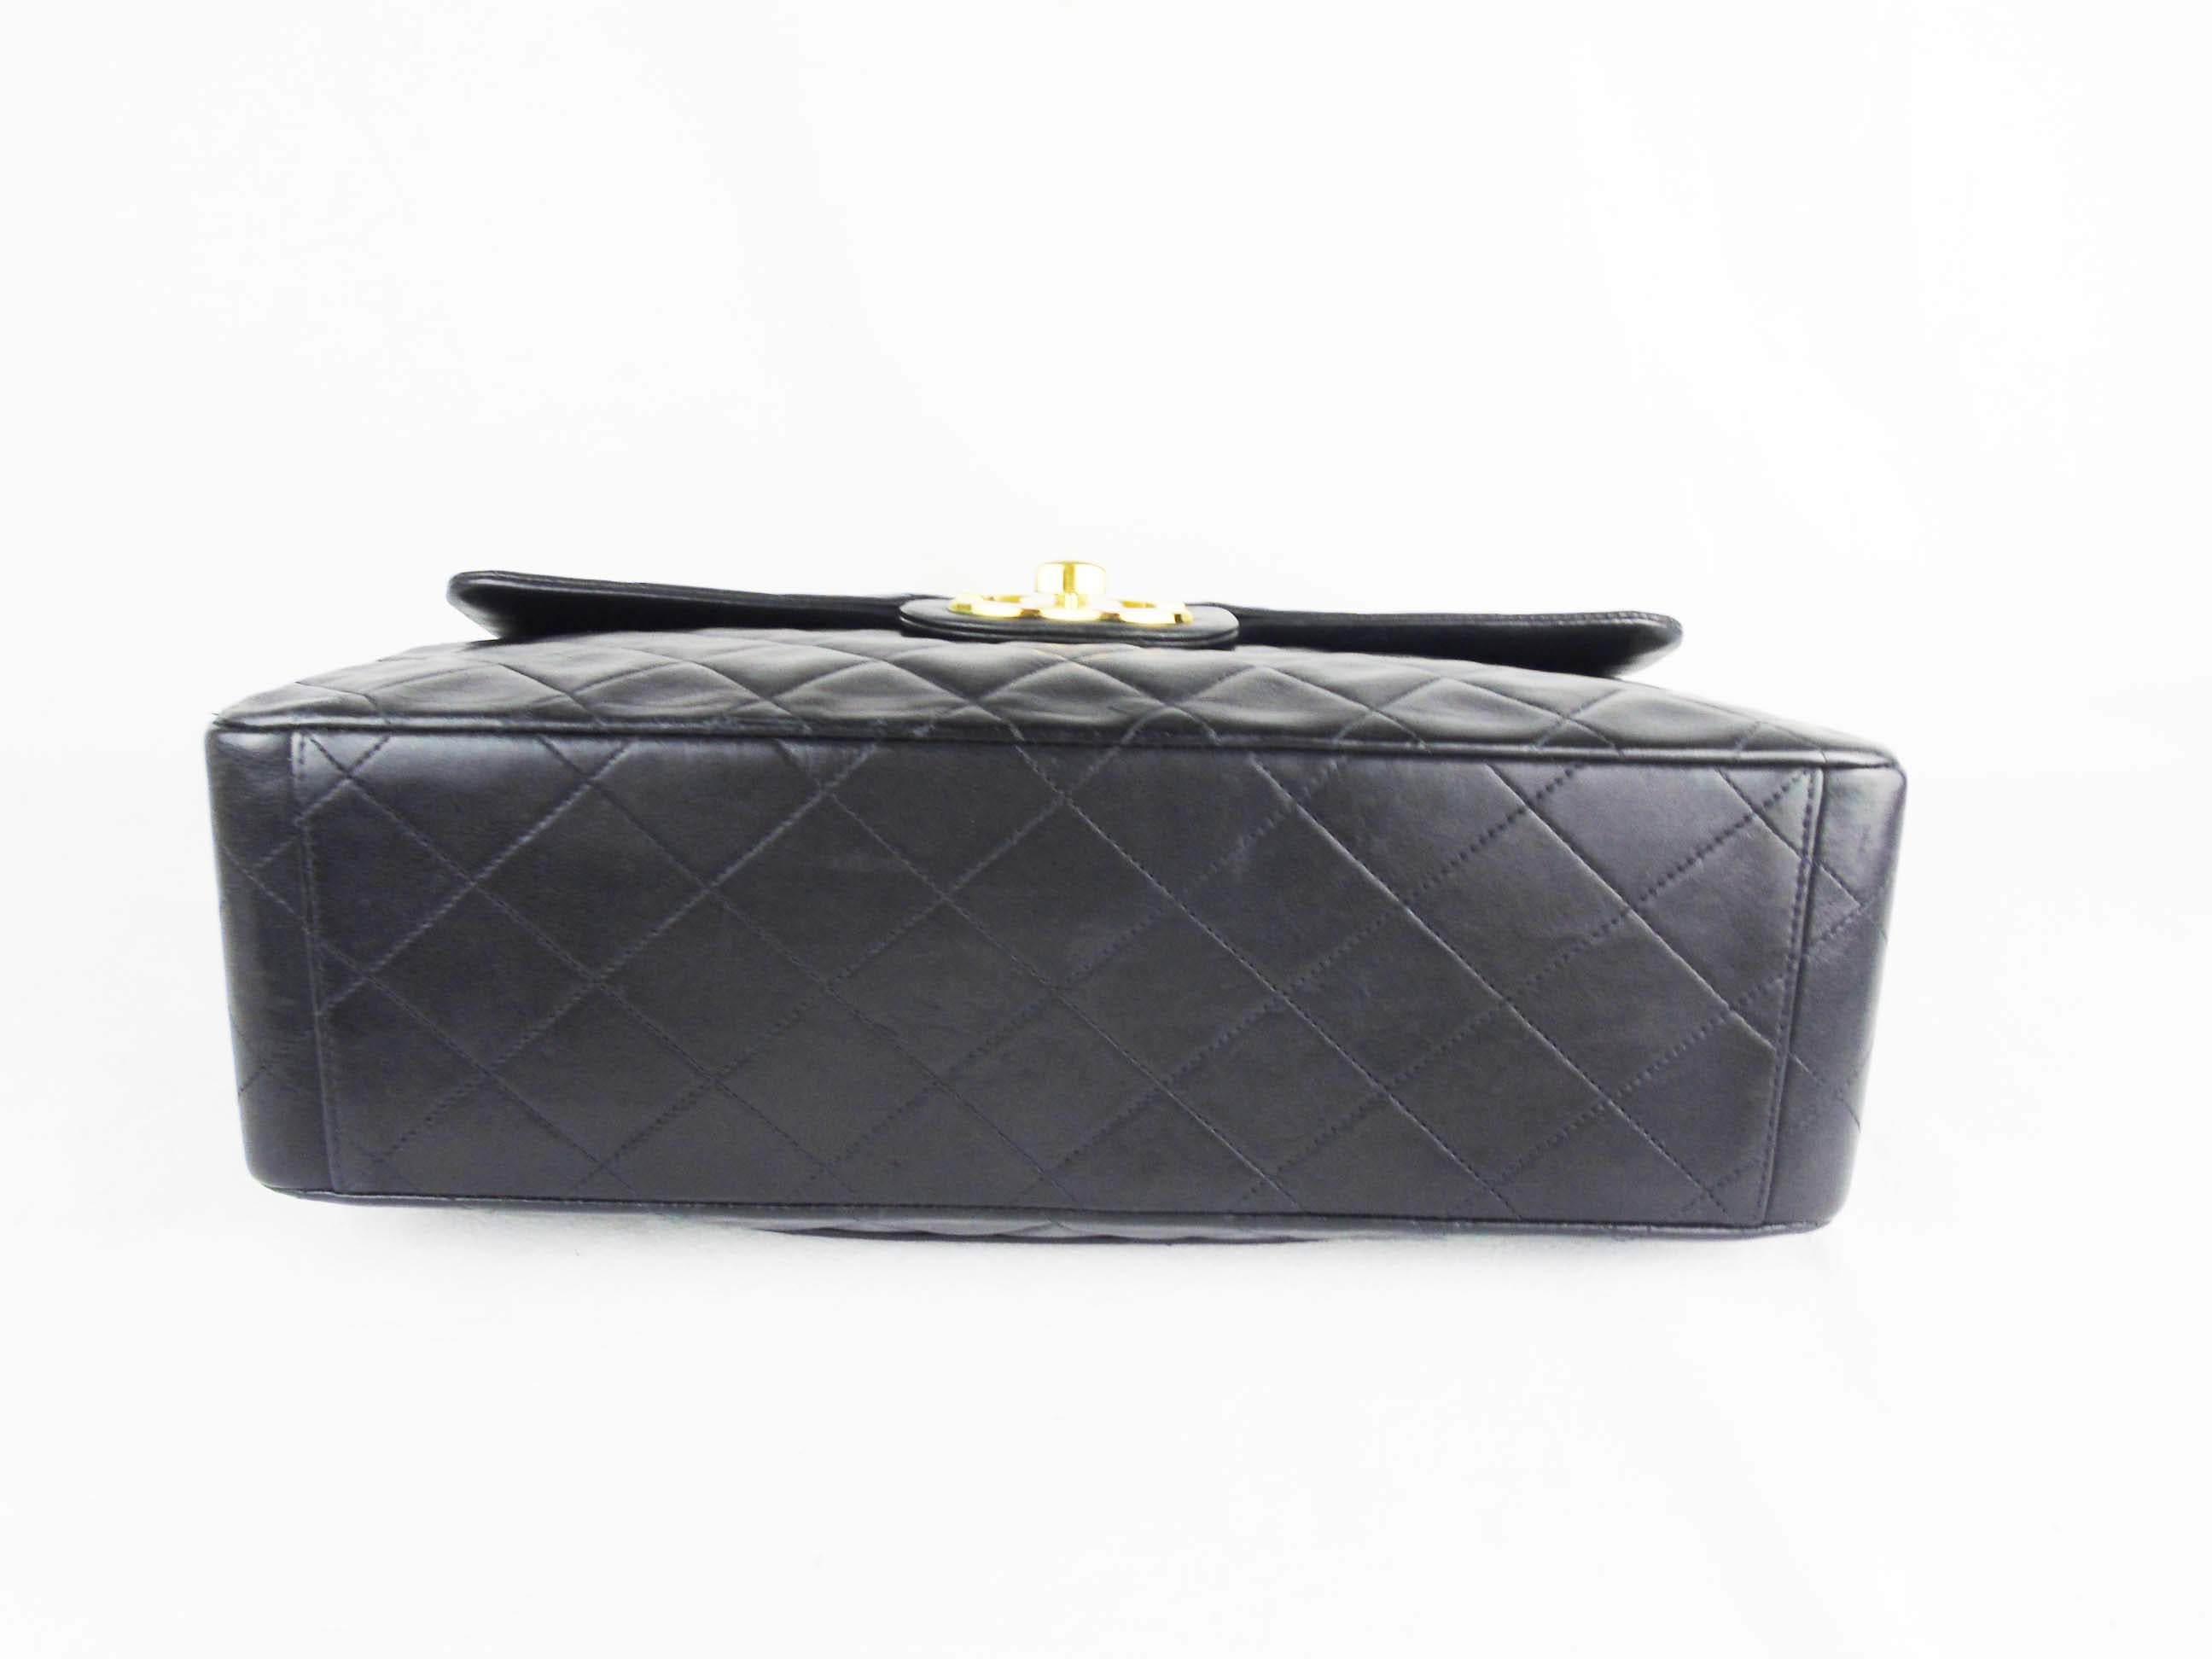 Naughtipidgins Nest - Chanel Timeless Classic 2.55 Jumbo Double Flap Bag in  Black Lambskin. See here for price and details >   Timeless-Classic-255-Jumbo-Double-Flap-Bag-in-Black